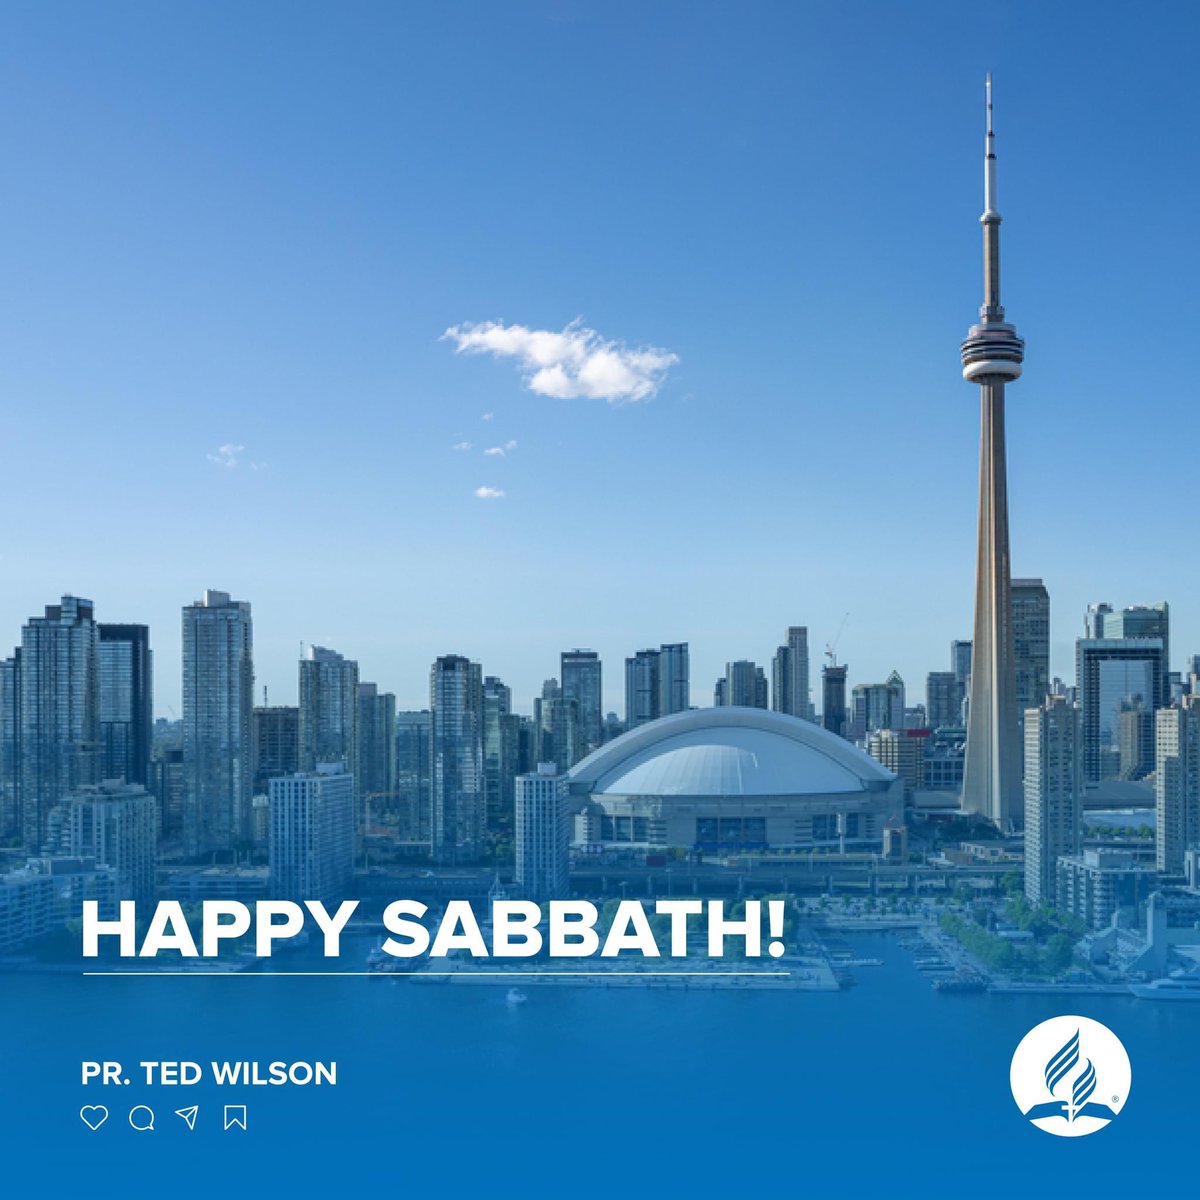 Happy Sabbath! #Sabbath #HappySabbath